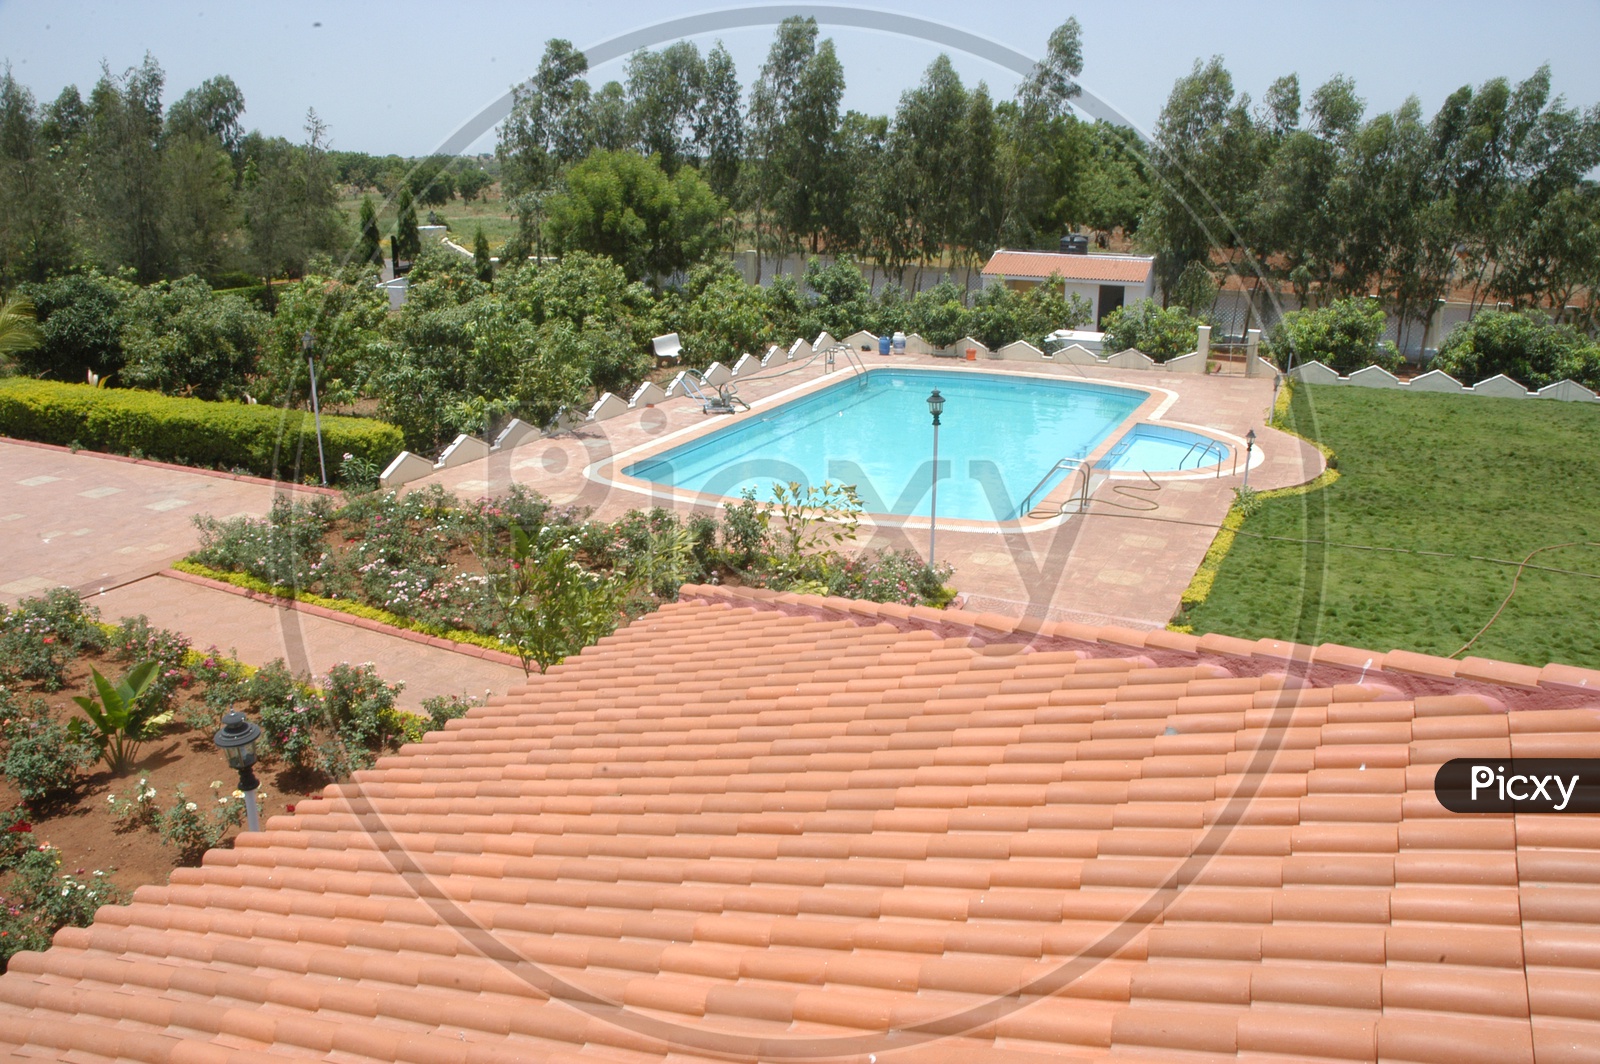 Top view of Backyard Swimming pool